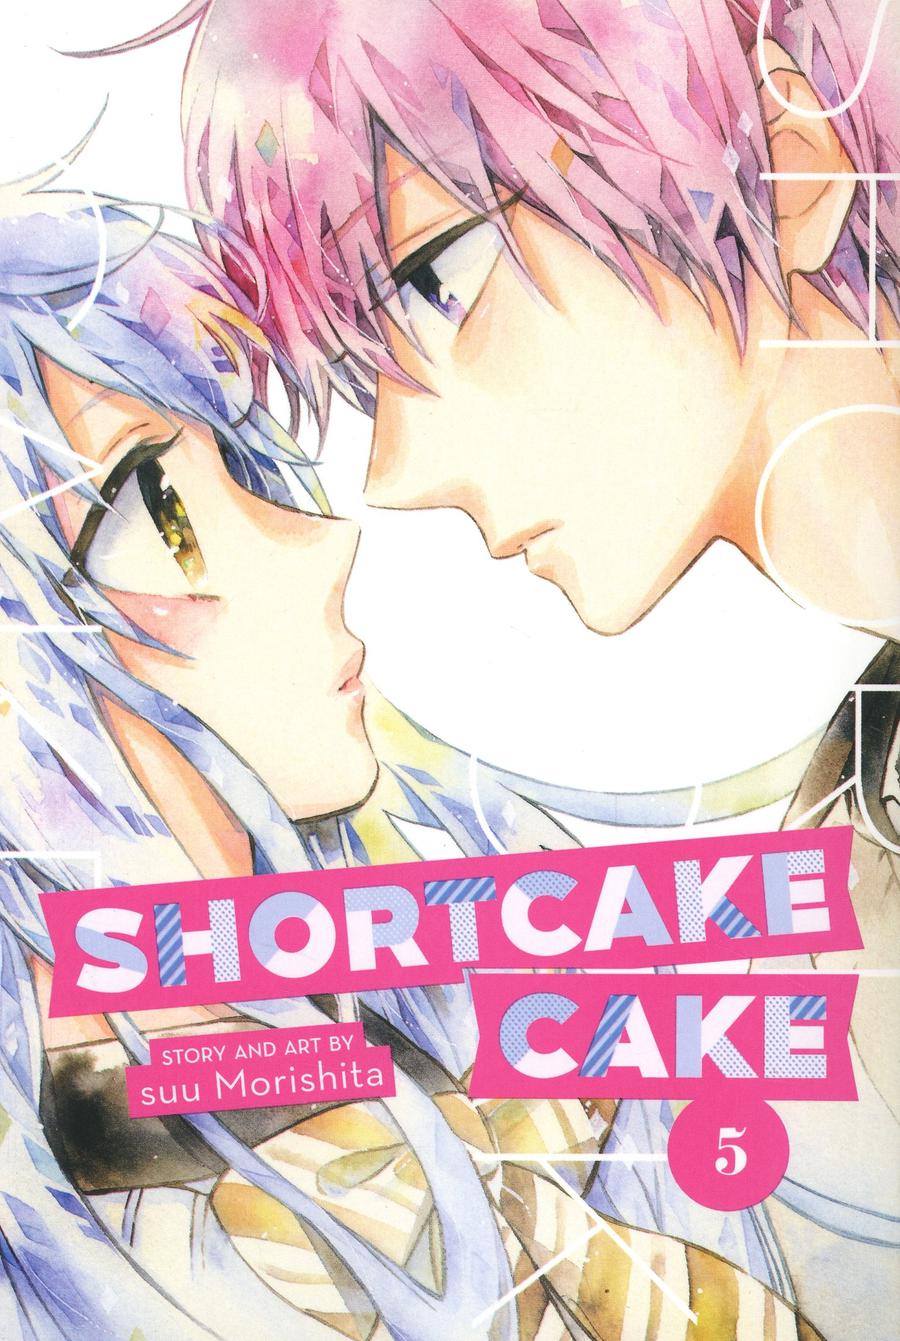 Shortcake Cake Vol 5 GN